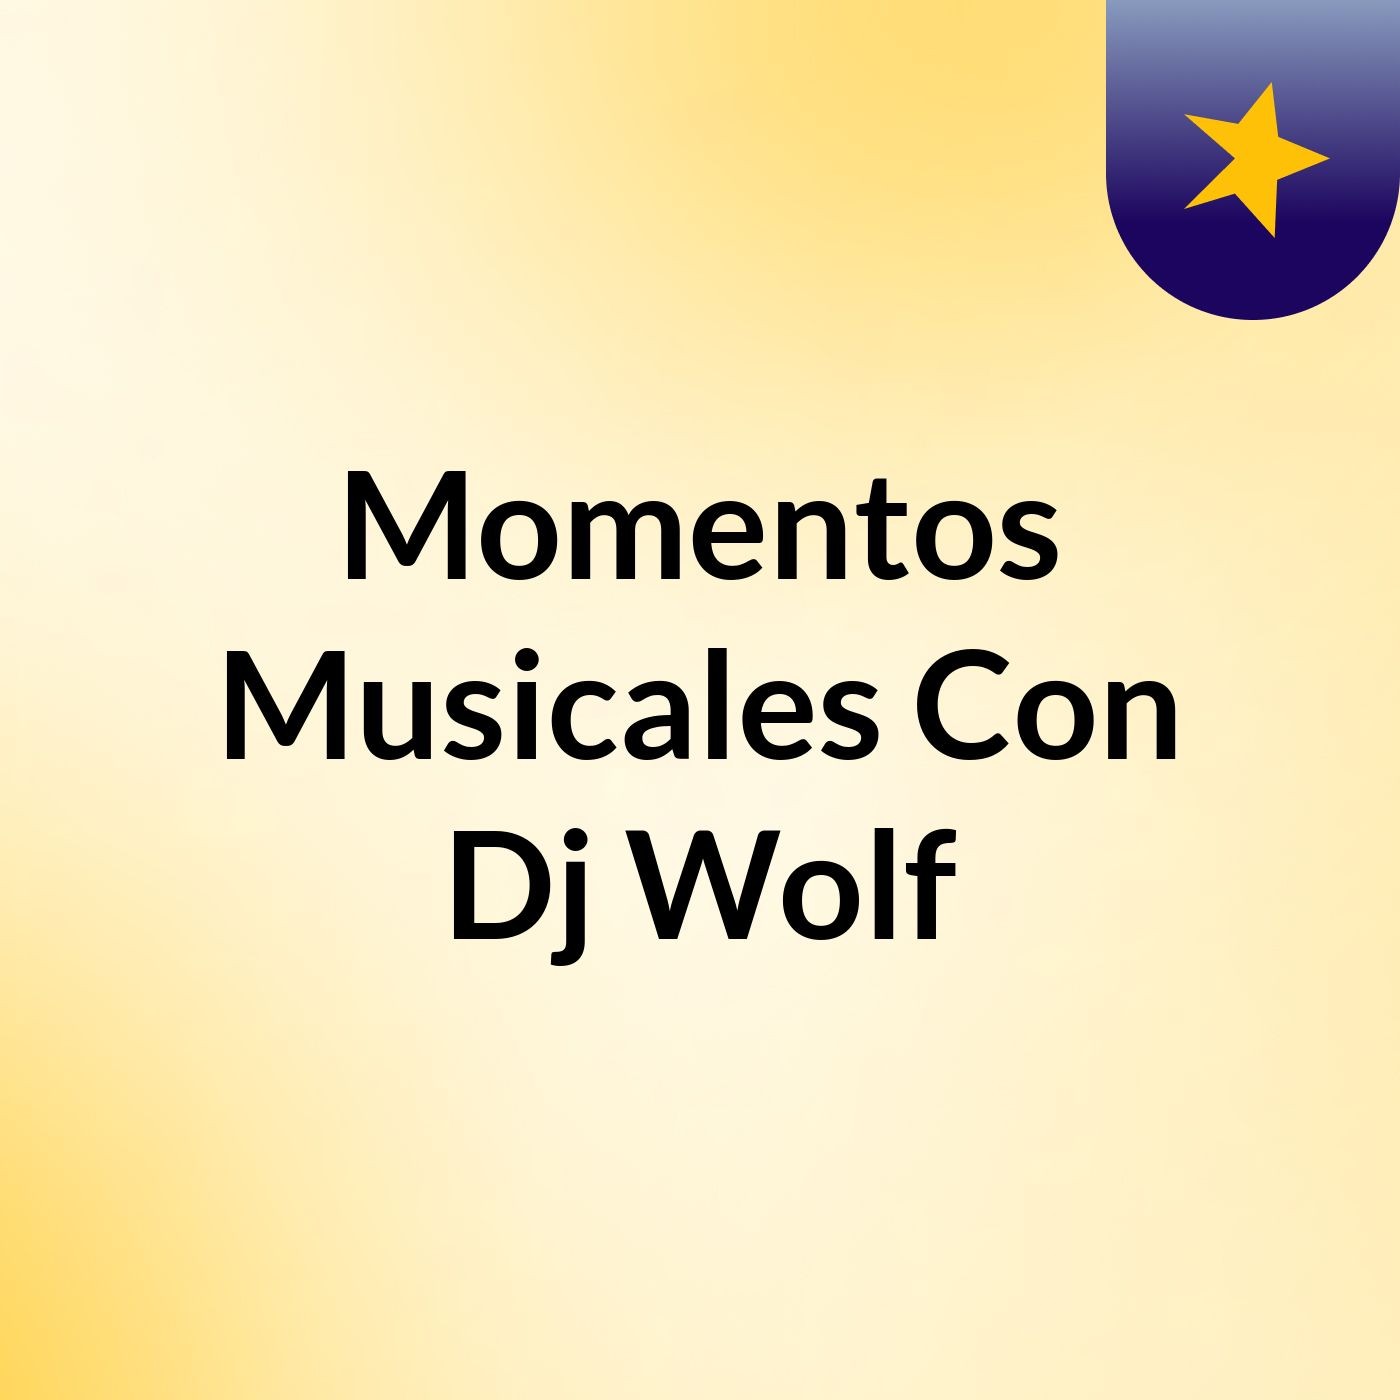 Momentos Musicales Con Dj Wolf